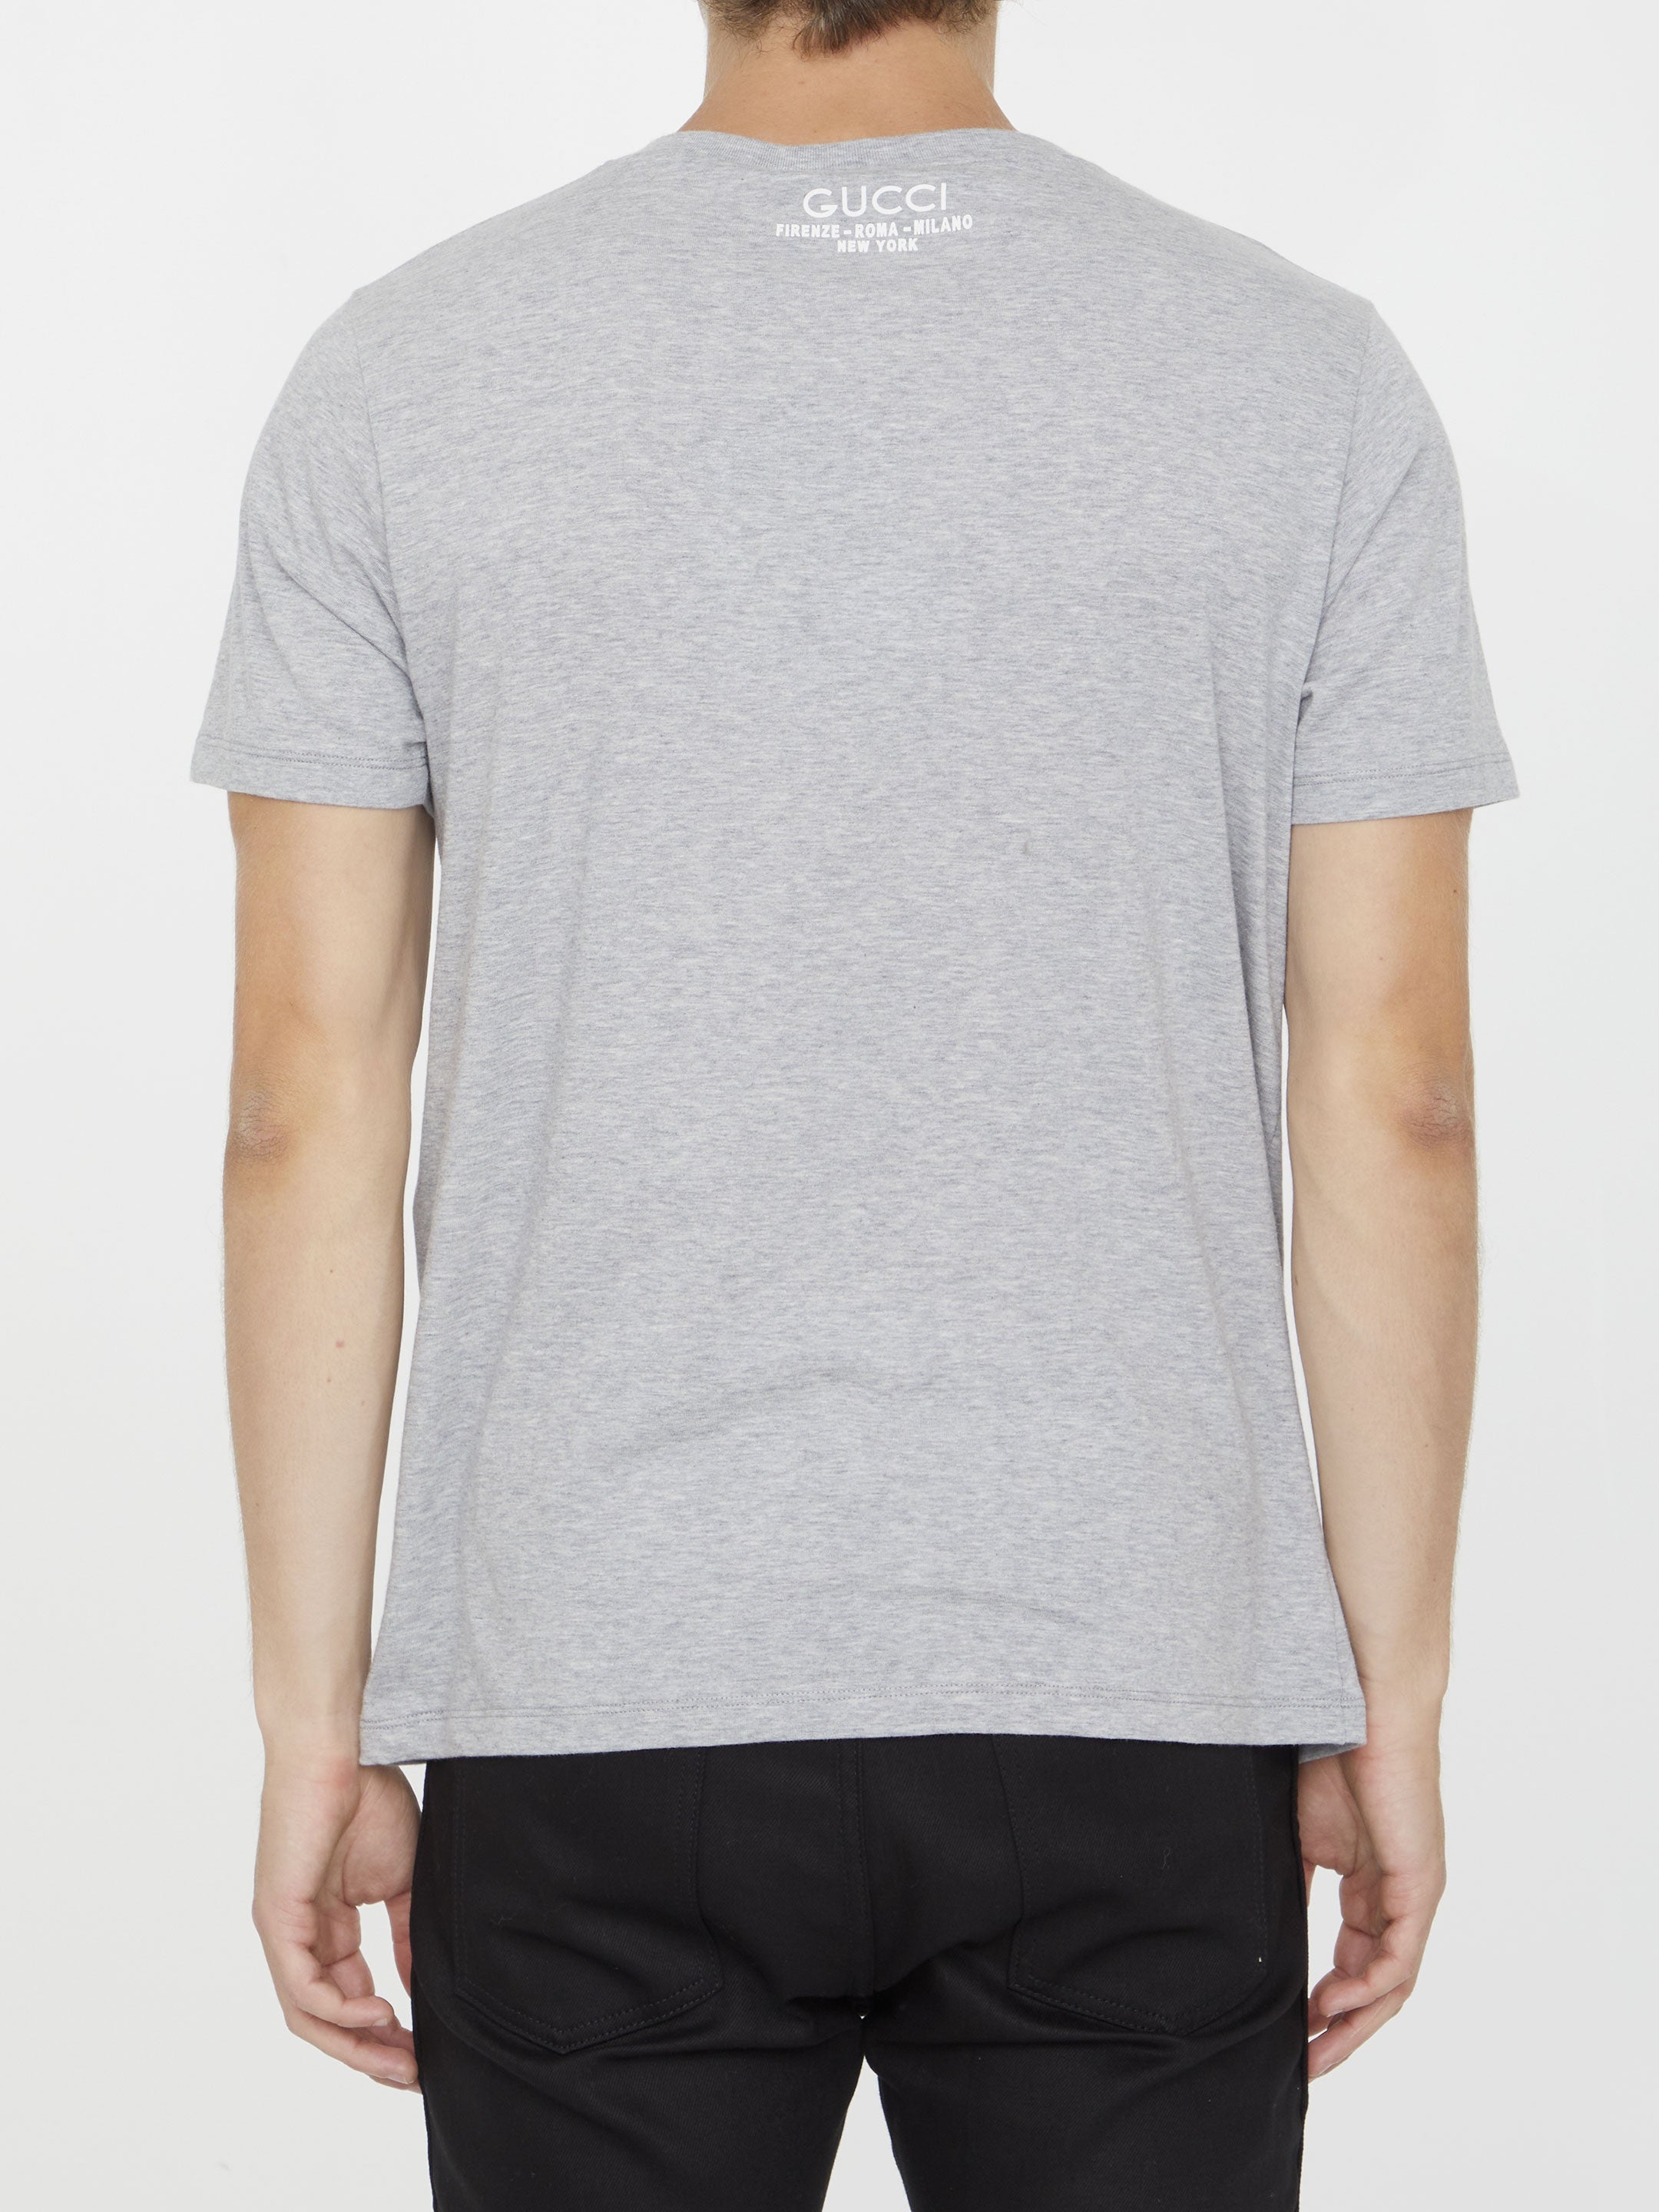 Grey cotton t-shirt